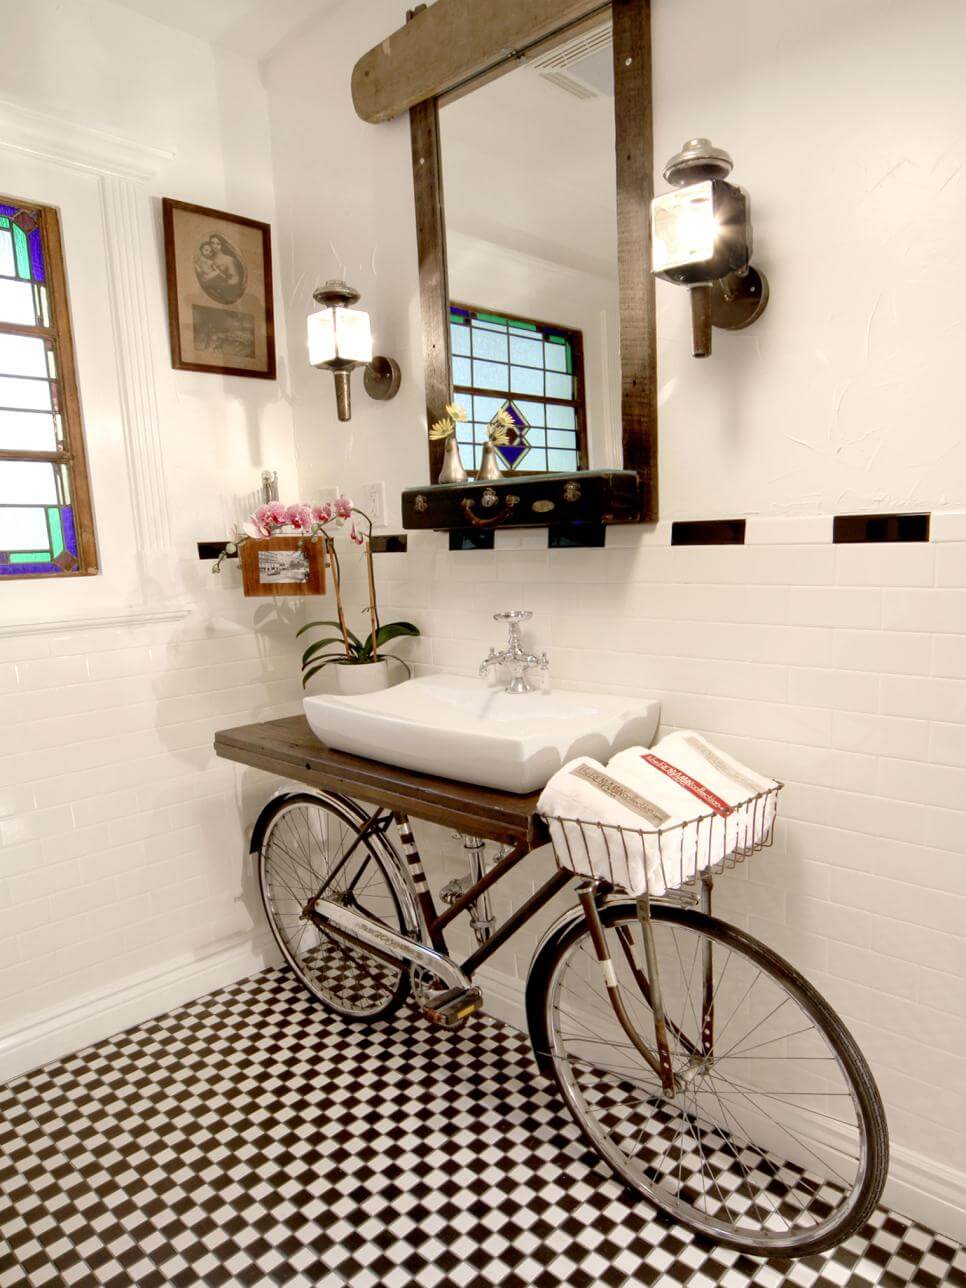 Brilliant DIY bathroom vanity